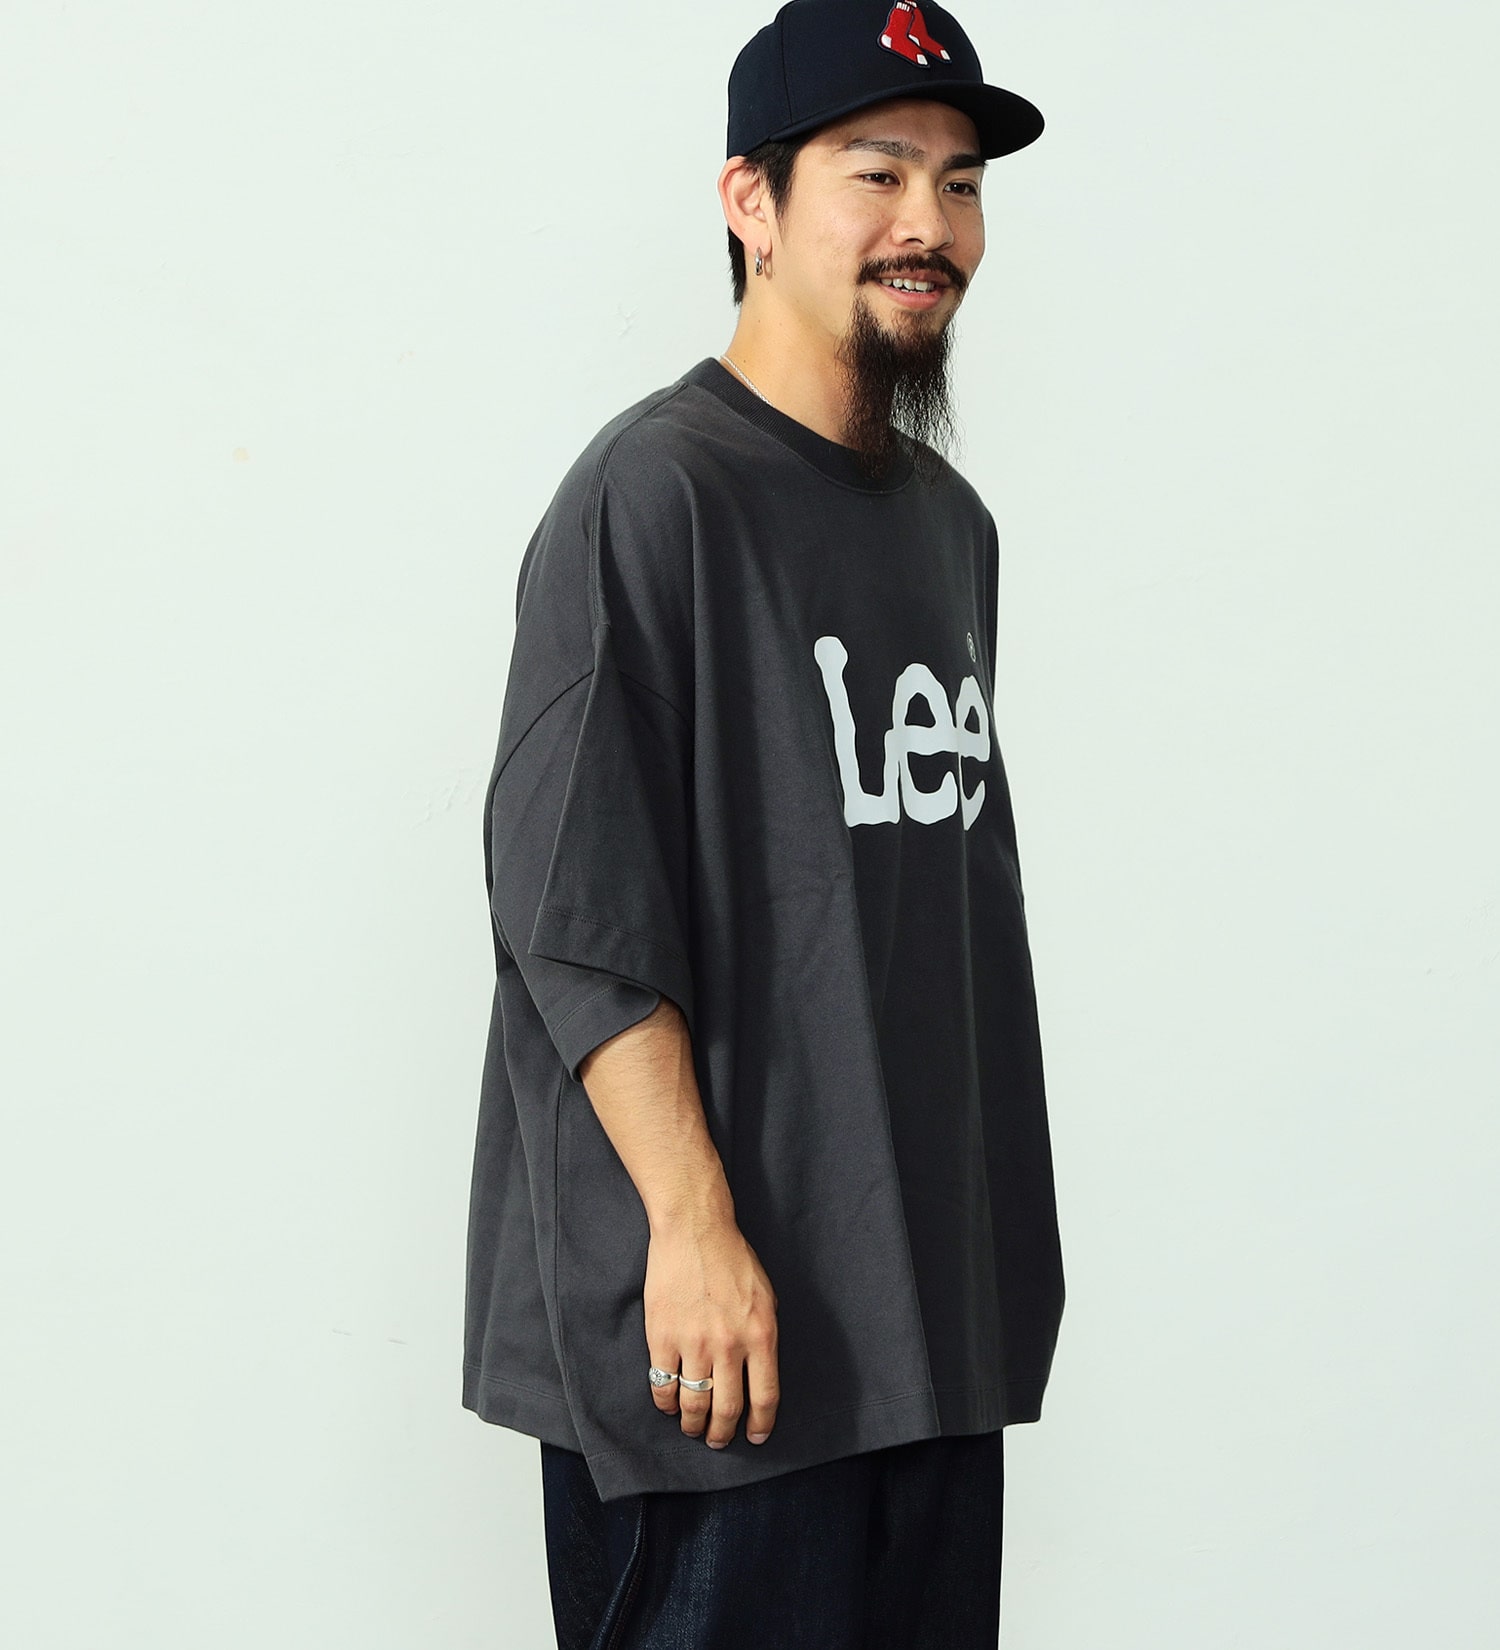 Lee(リー)の【SUPER SIZED】Lee LOGO ショートスリーブTee|トップス/Tシャツ/カットソー/メンズ|チャコールグレー